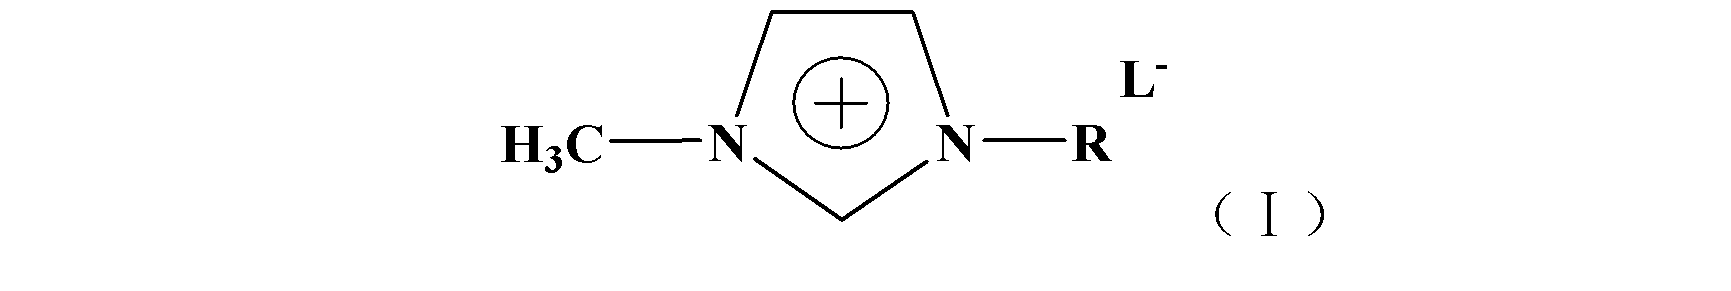 Preparation method of tert-butyl carbazate